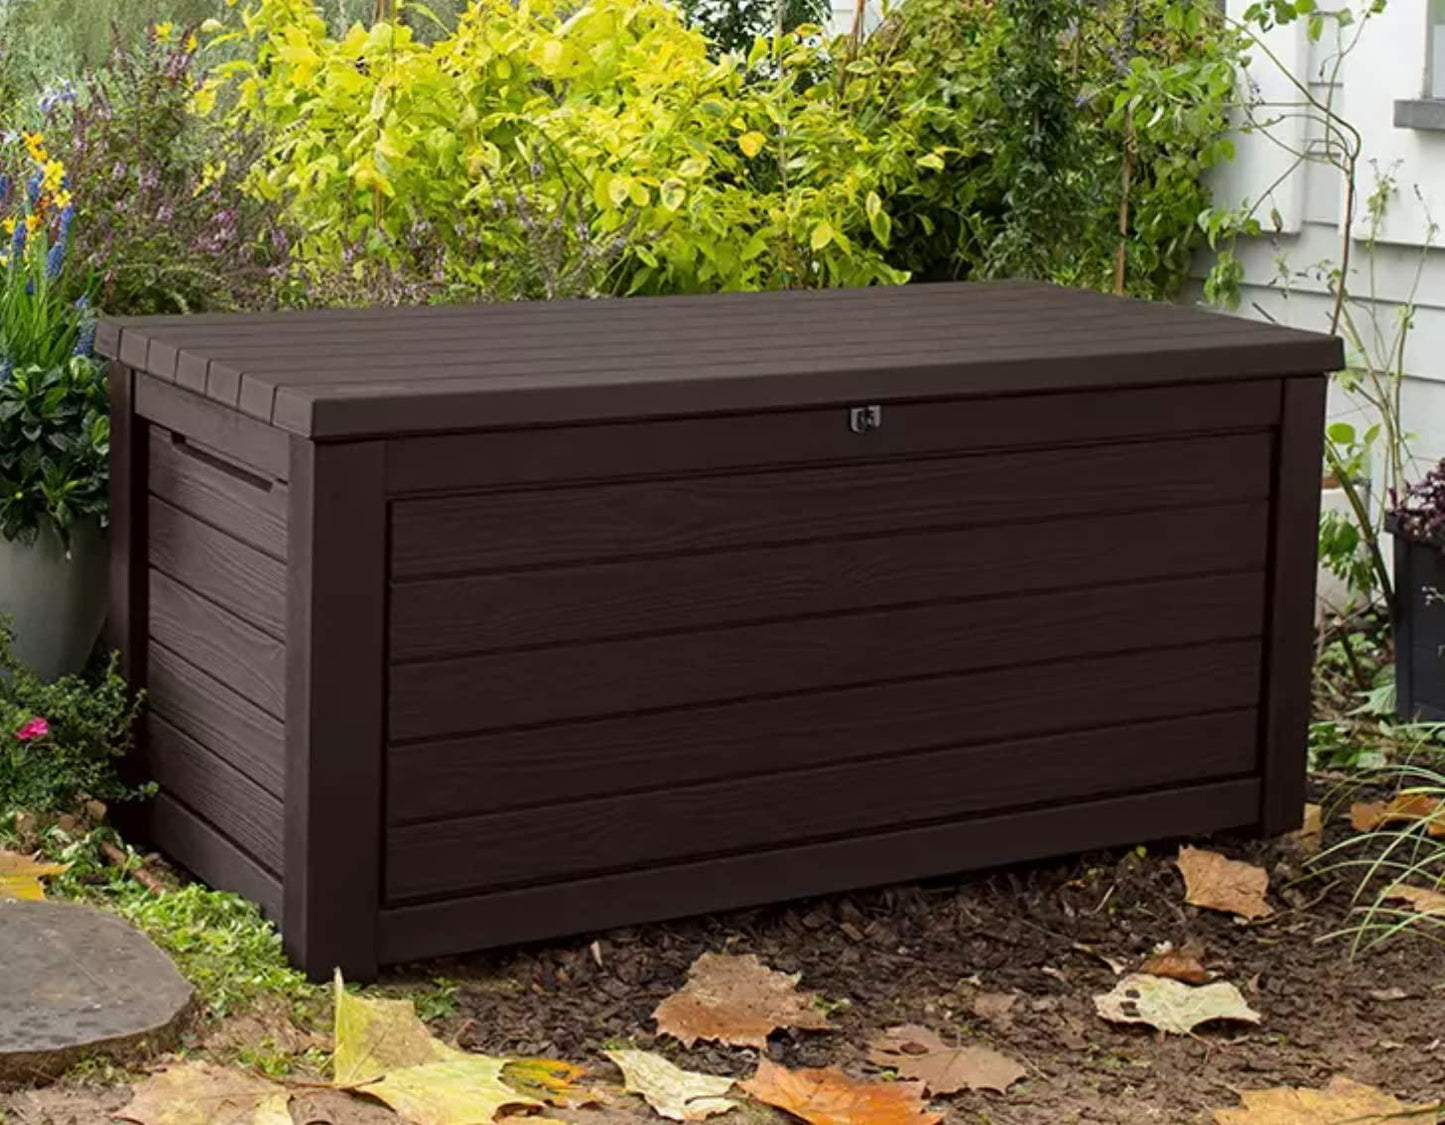 165 Gallon Weather Resistant Resin Deck Storage Container Box Outdoor Patio Garden Furniture, Brown